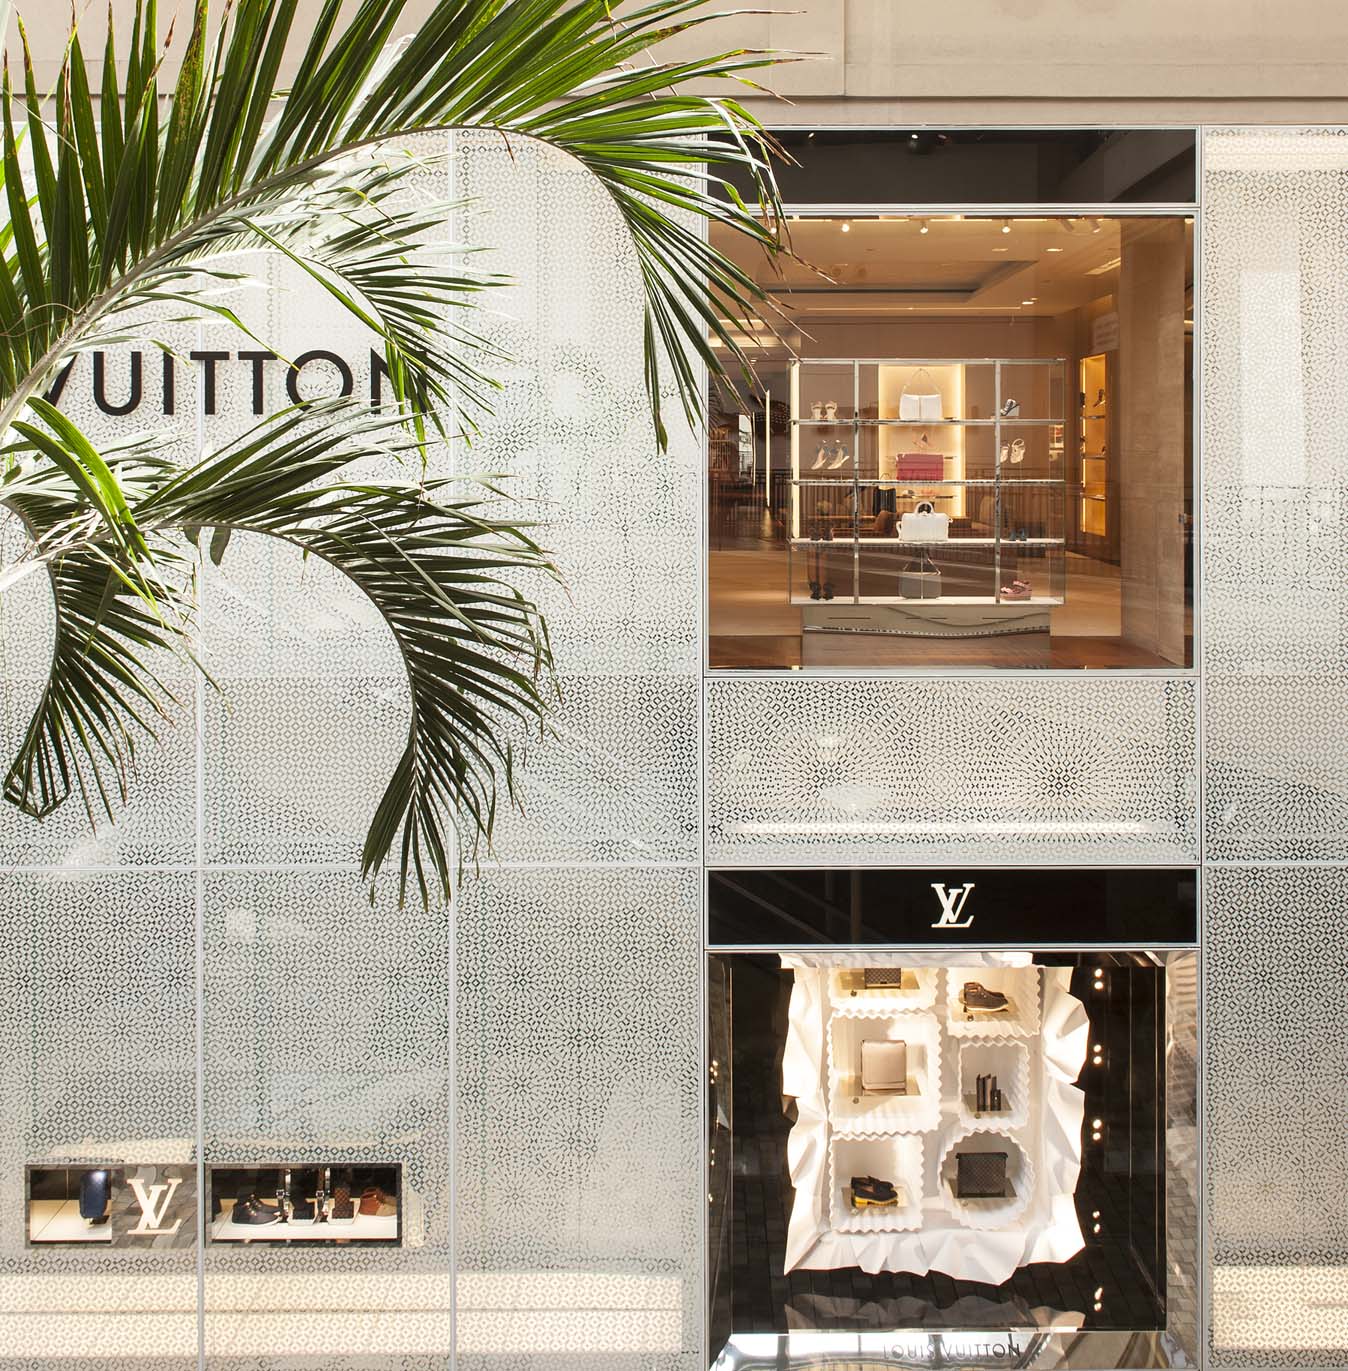 Louis Vuitton GUMP – Honolulu, HI